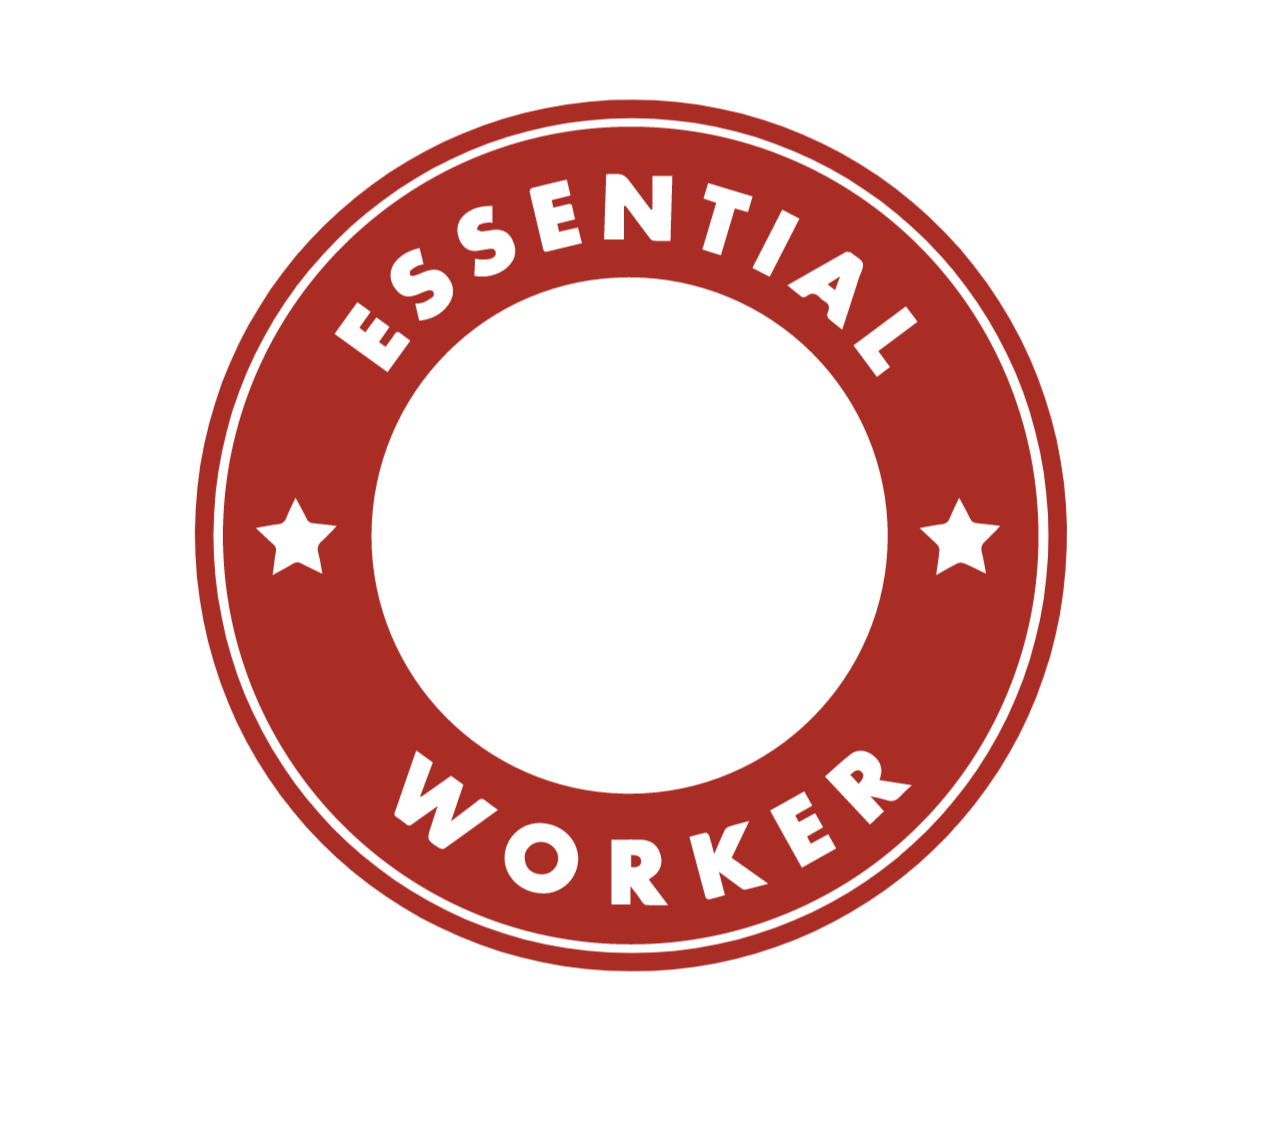 Essential Worker